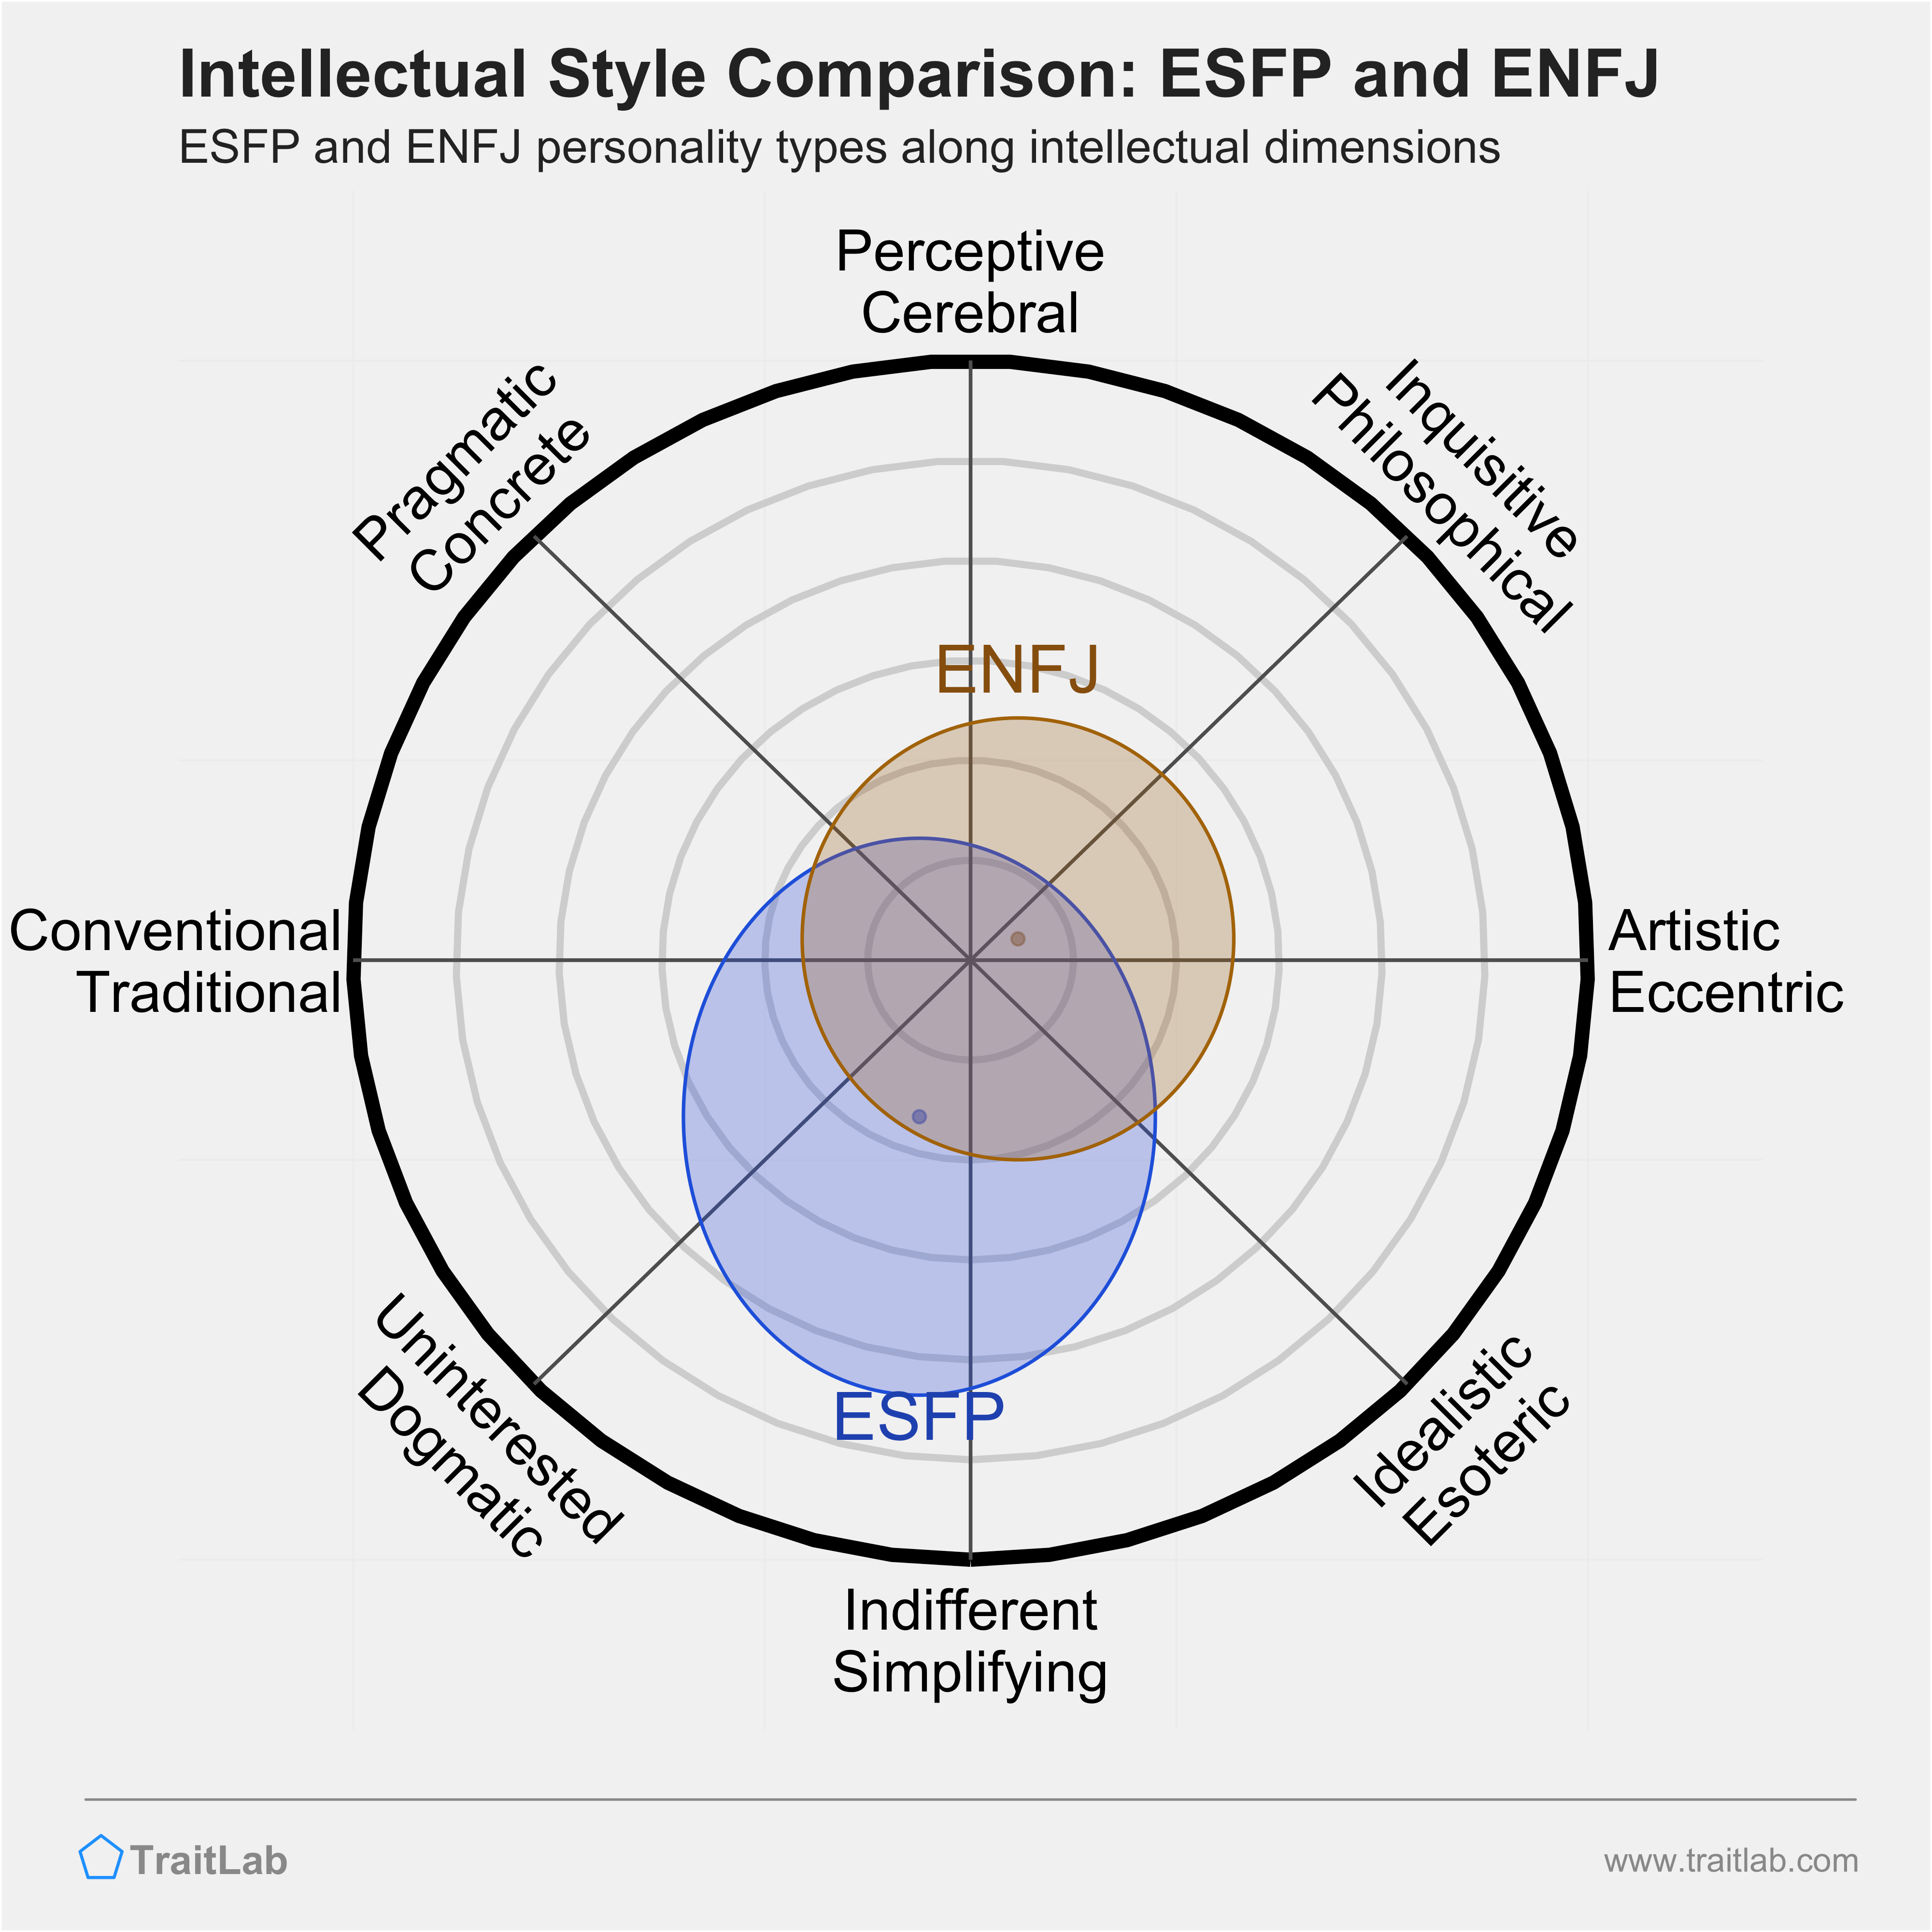 ESFP and ENFJ comparison across intellectual dimensions